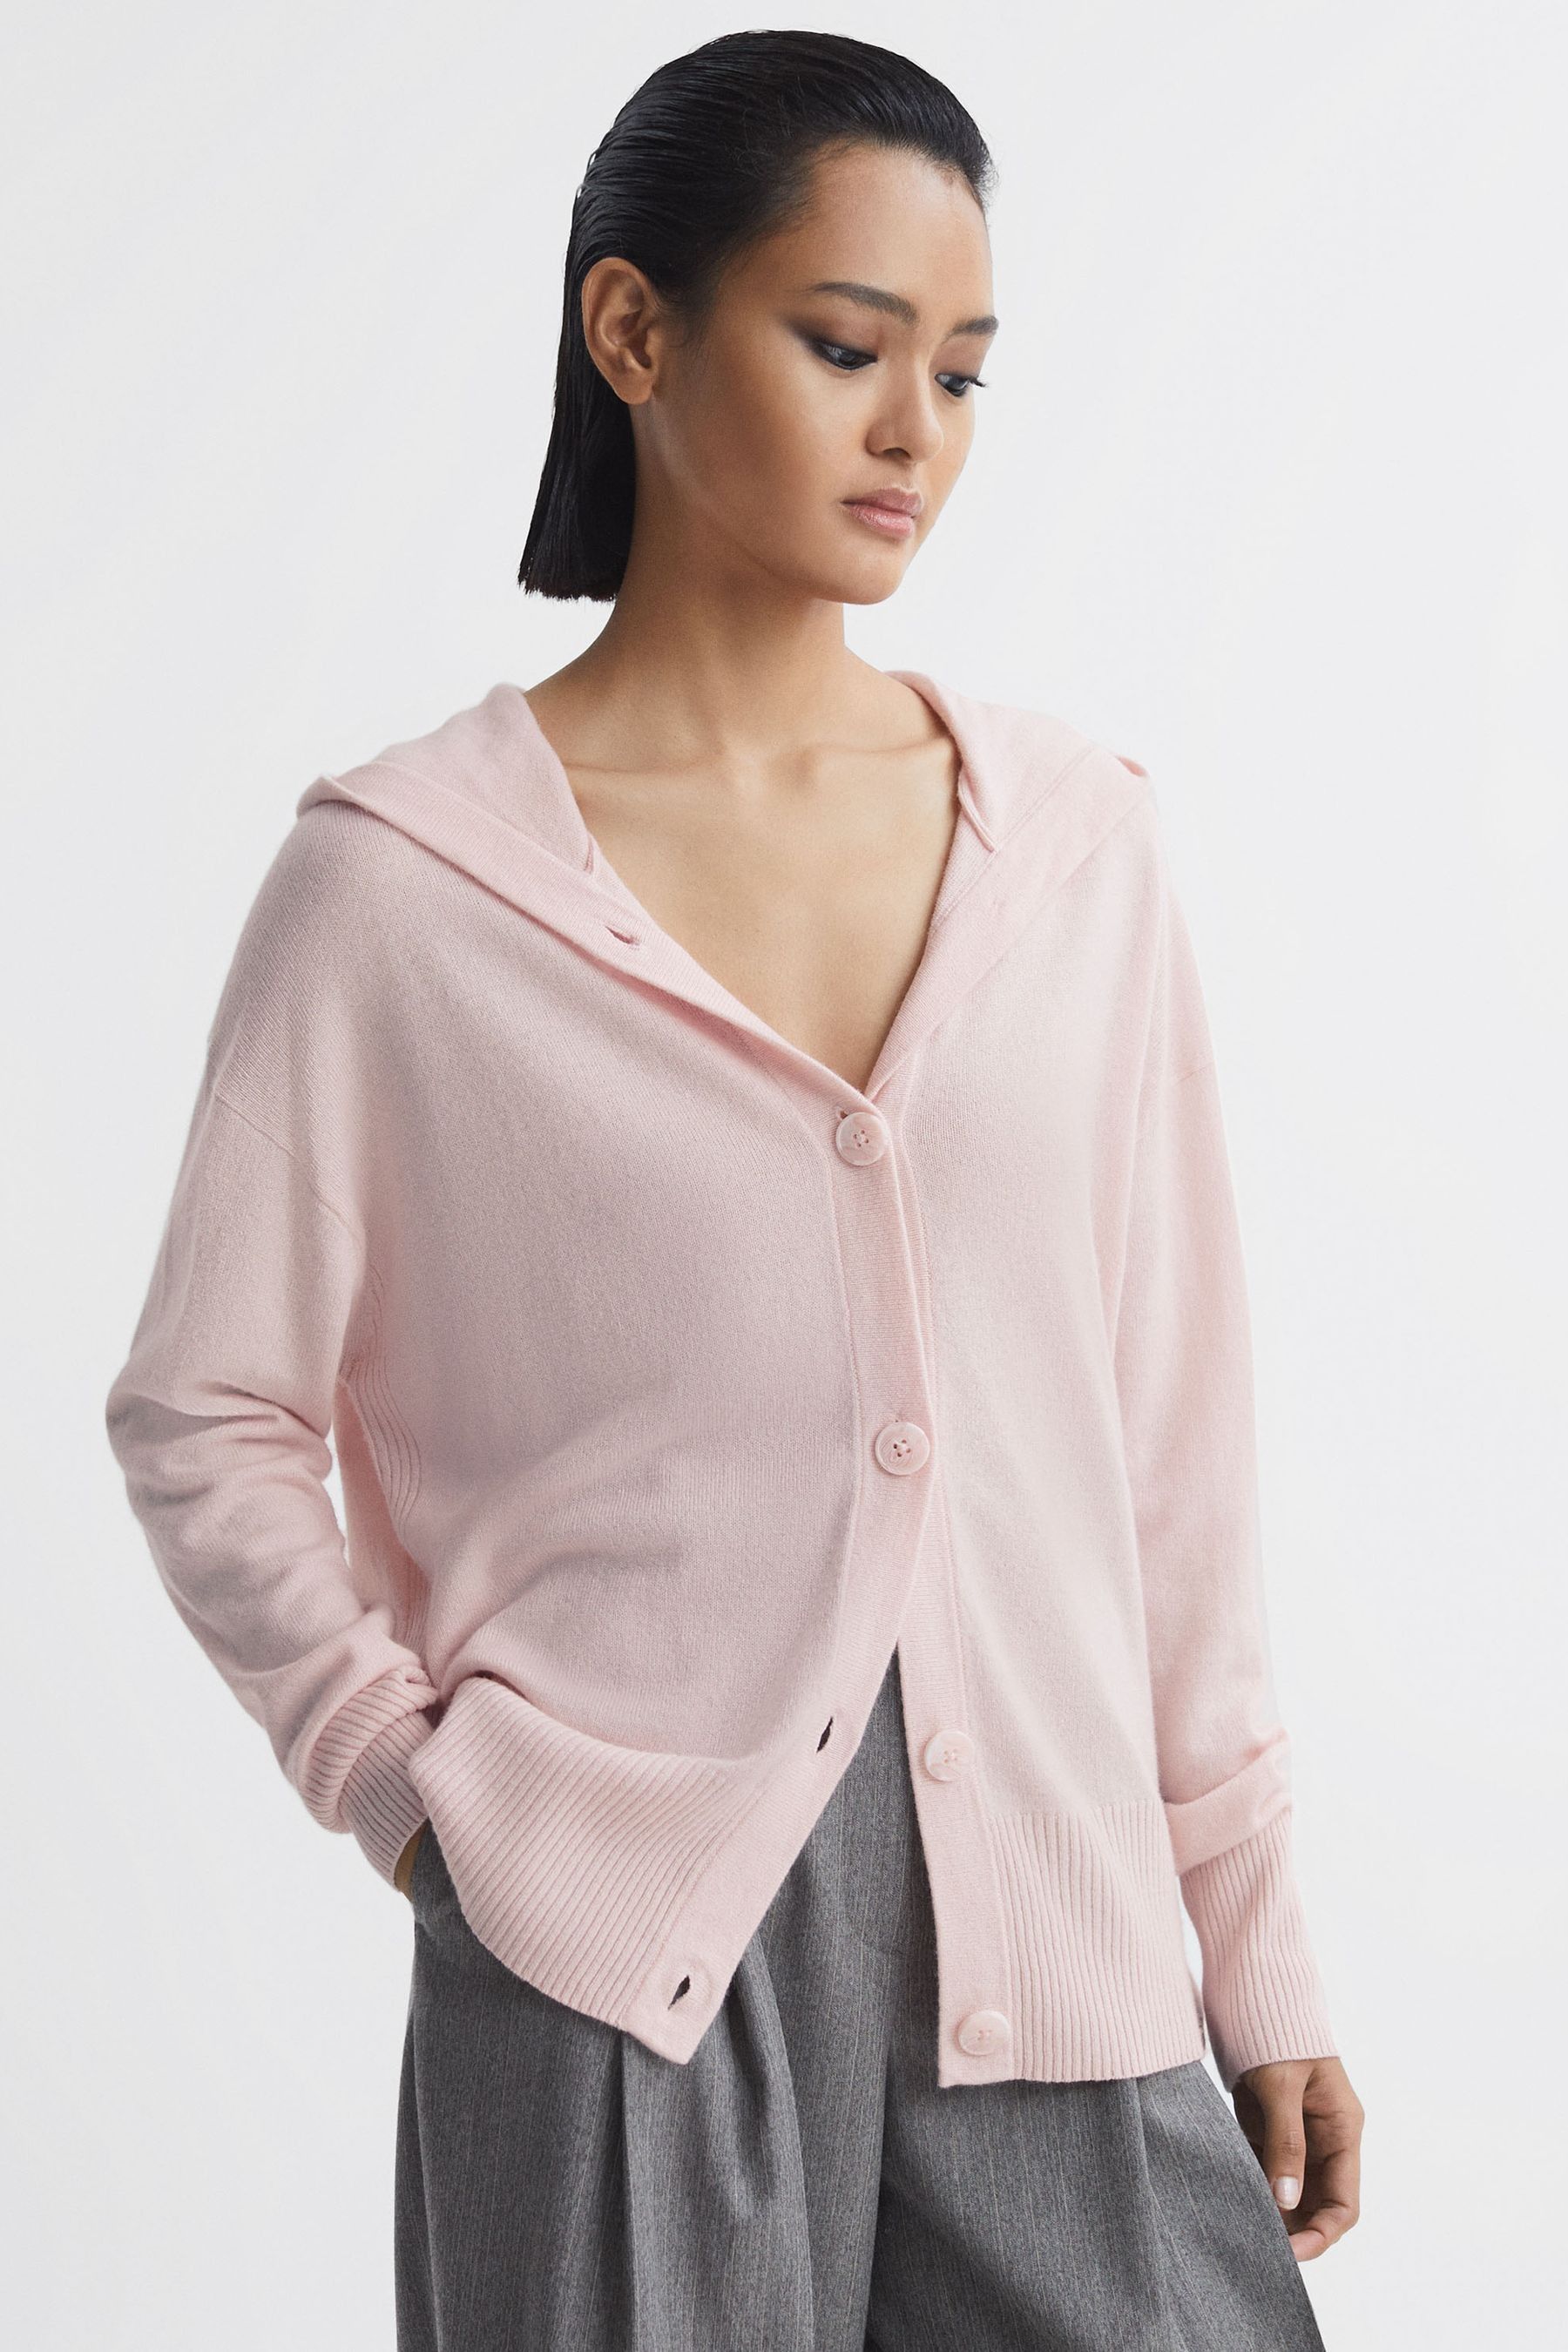 Reiss Evie - Light Pink Wool Blend Hooded Cardigan, S